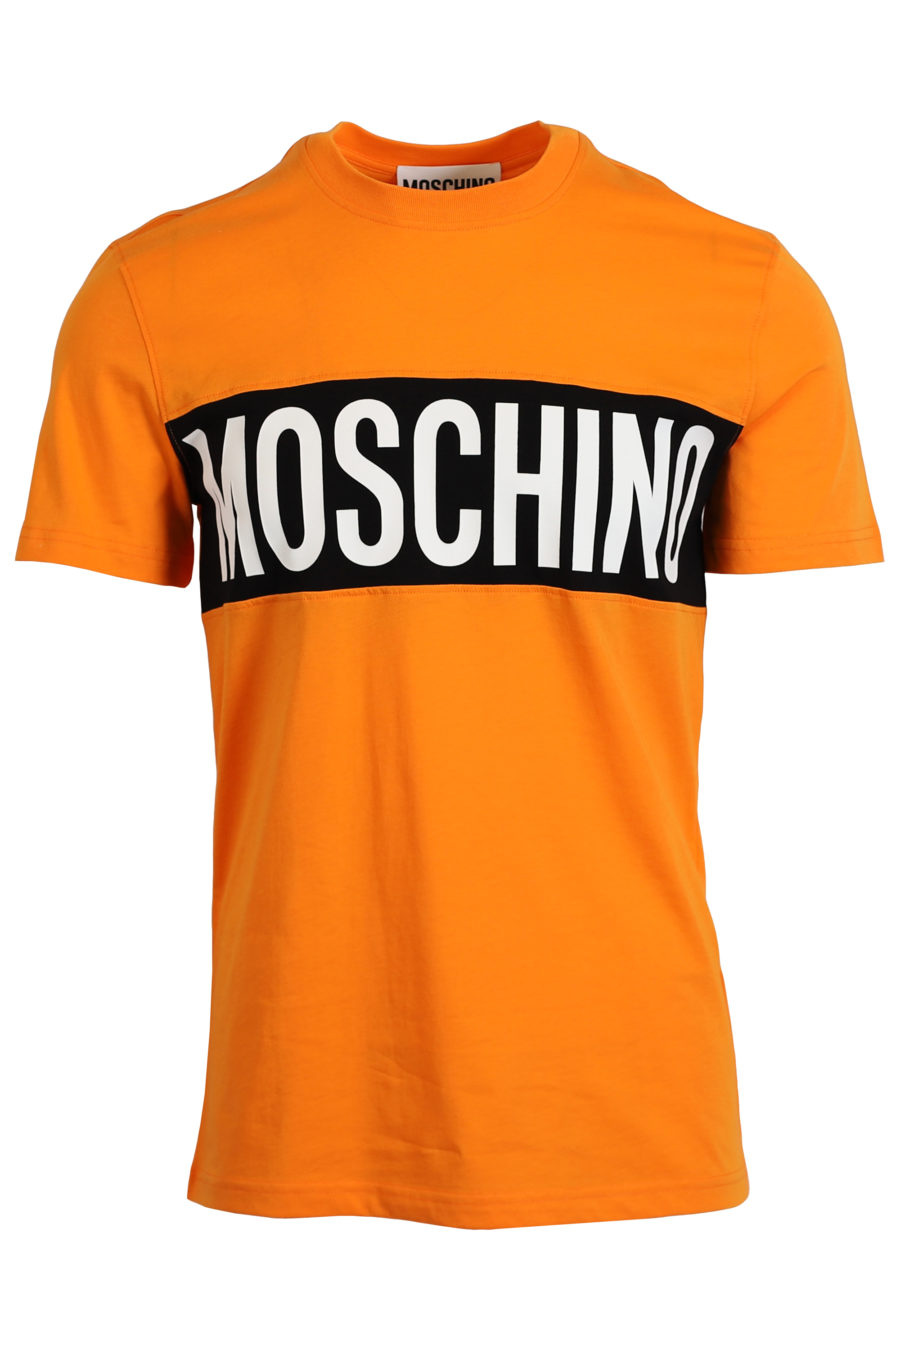 Camiseta naranja logo blanco y negro - IMG 0985